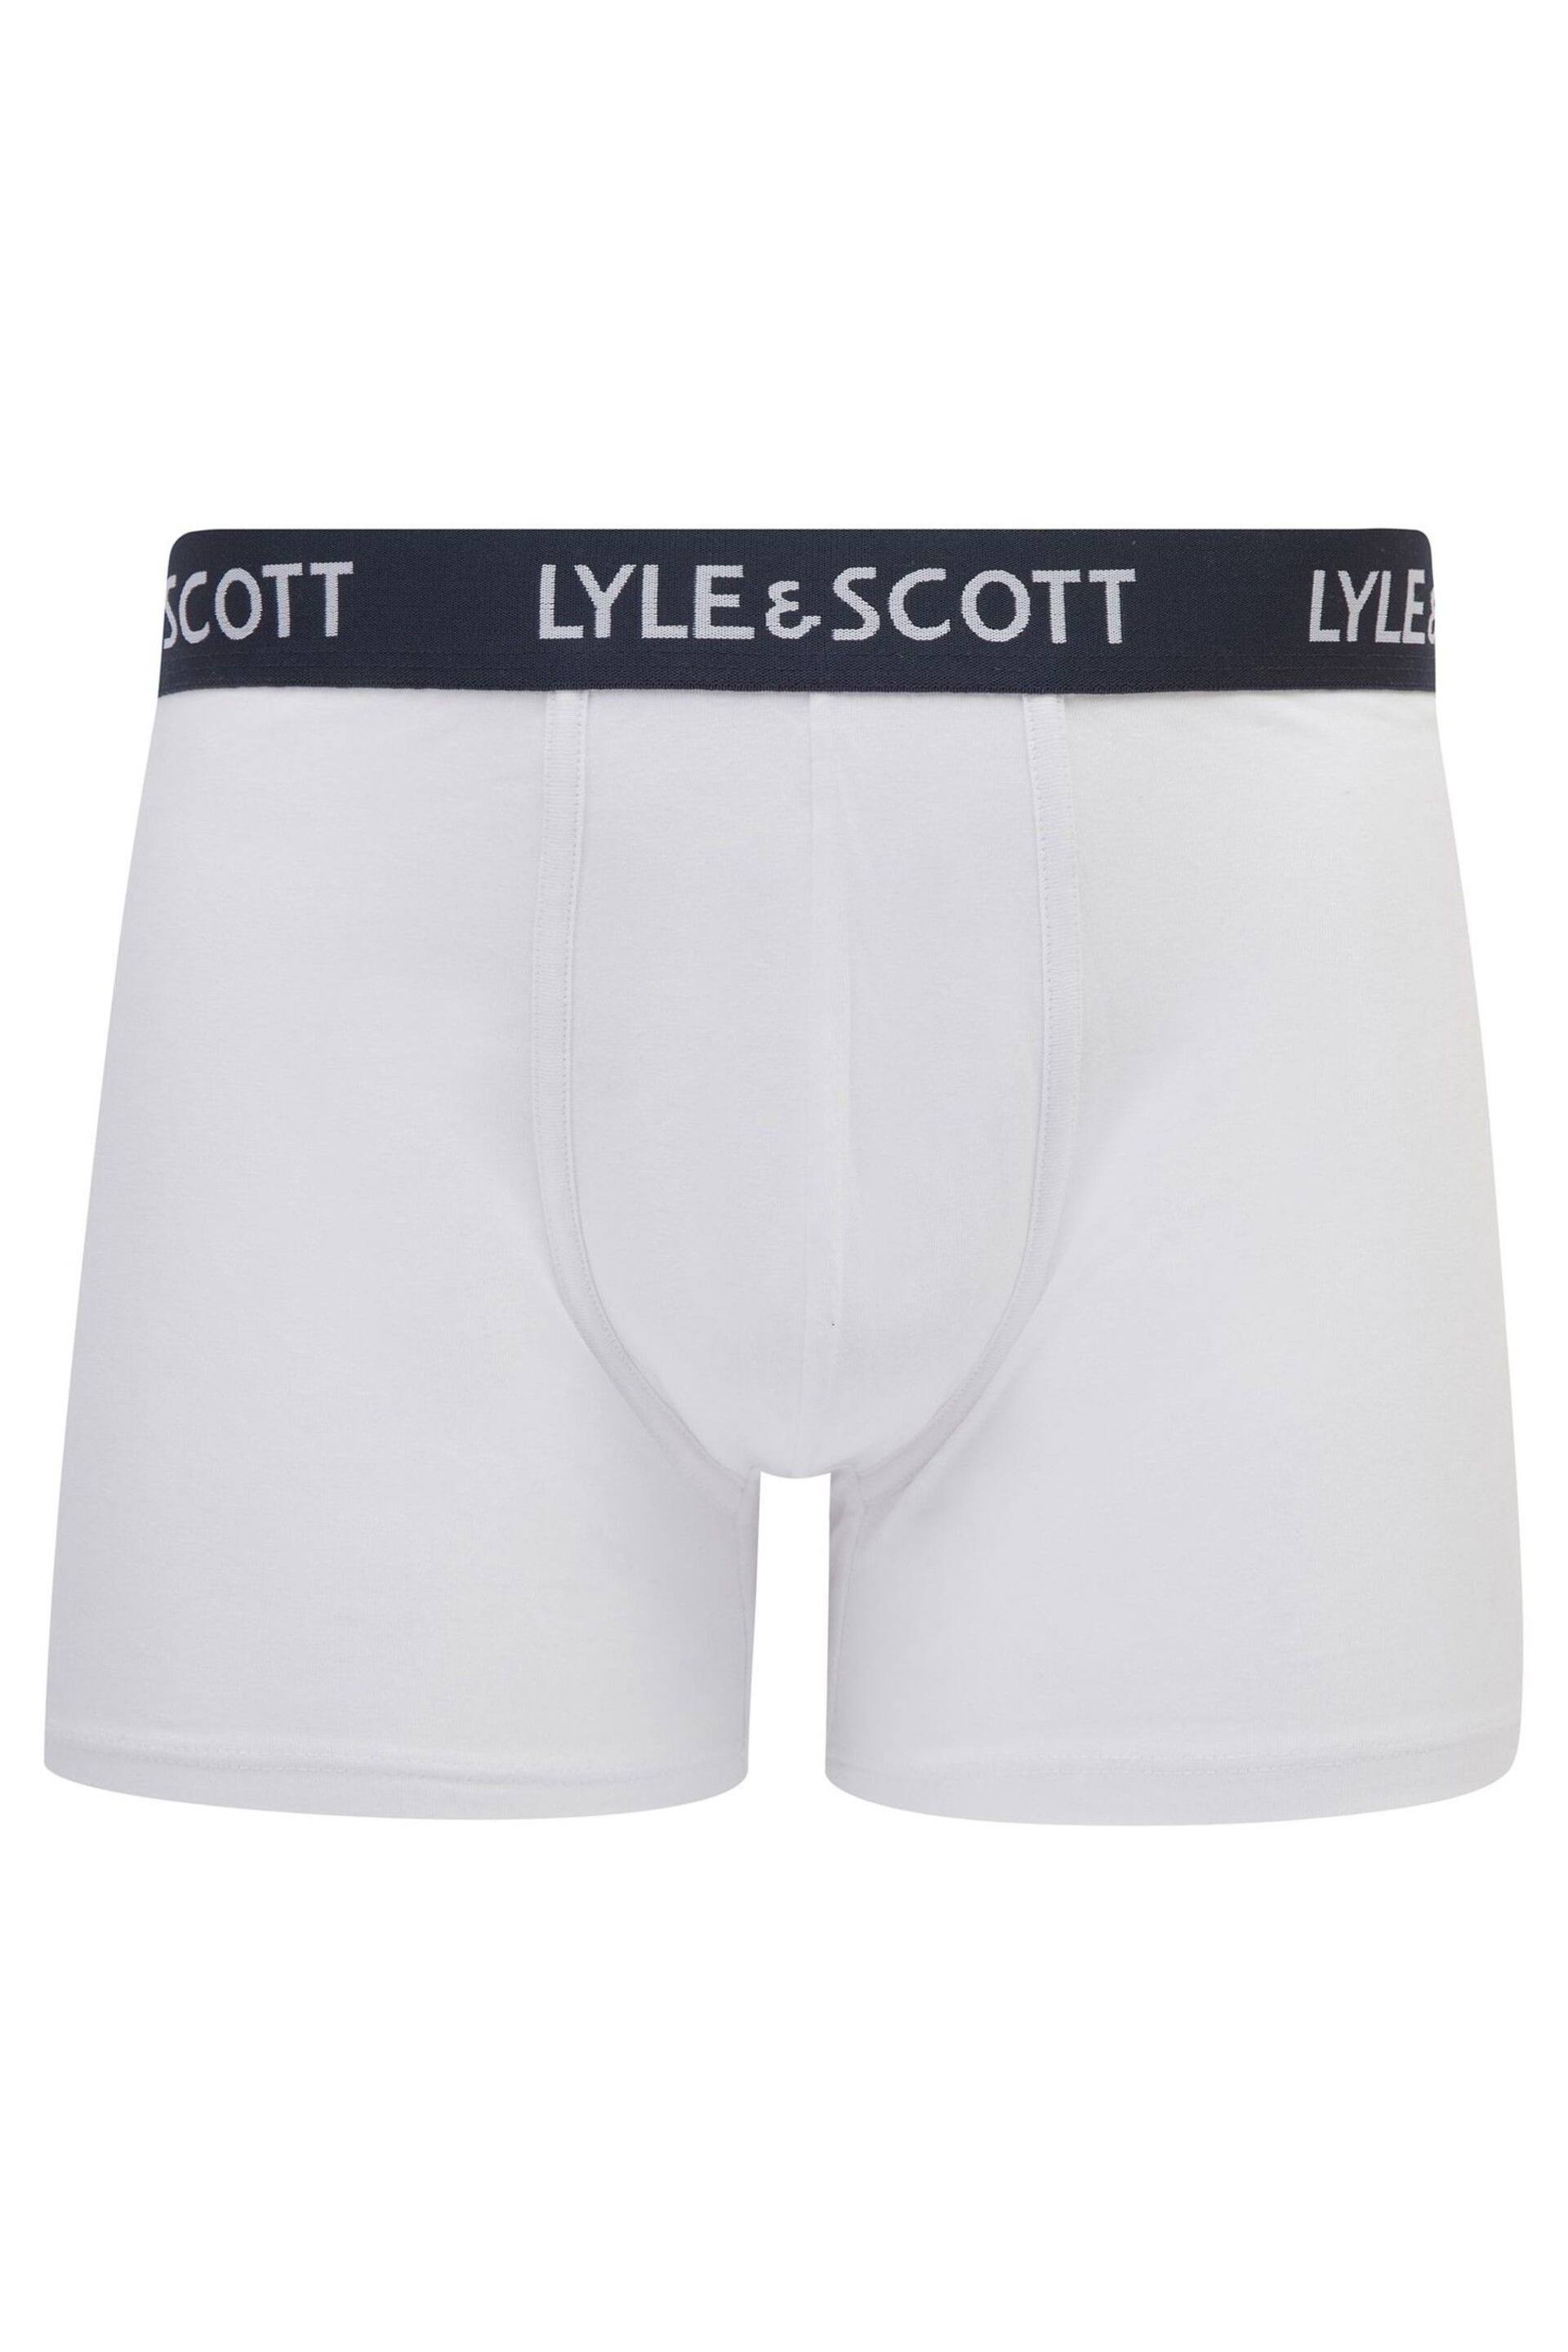 Lyle & Scott Ethan Premium White Underwear Trunks 3 Pack - Image 2 of 4